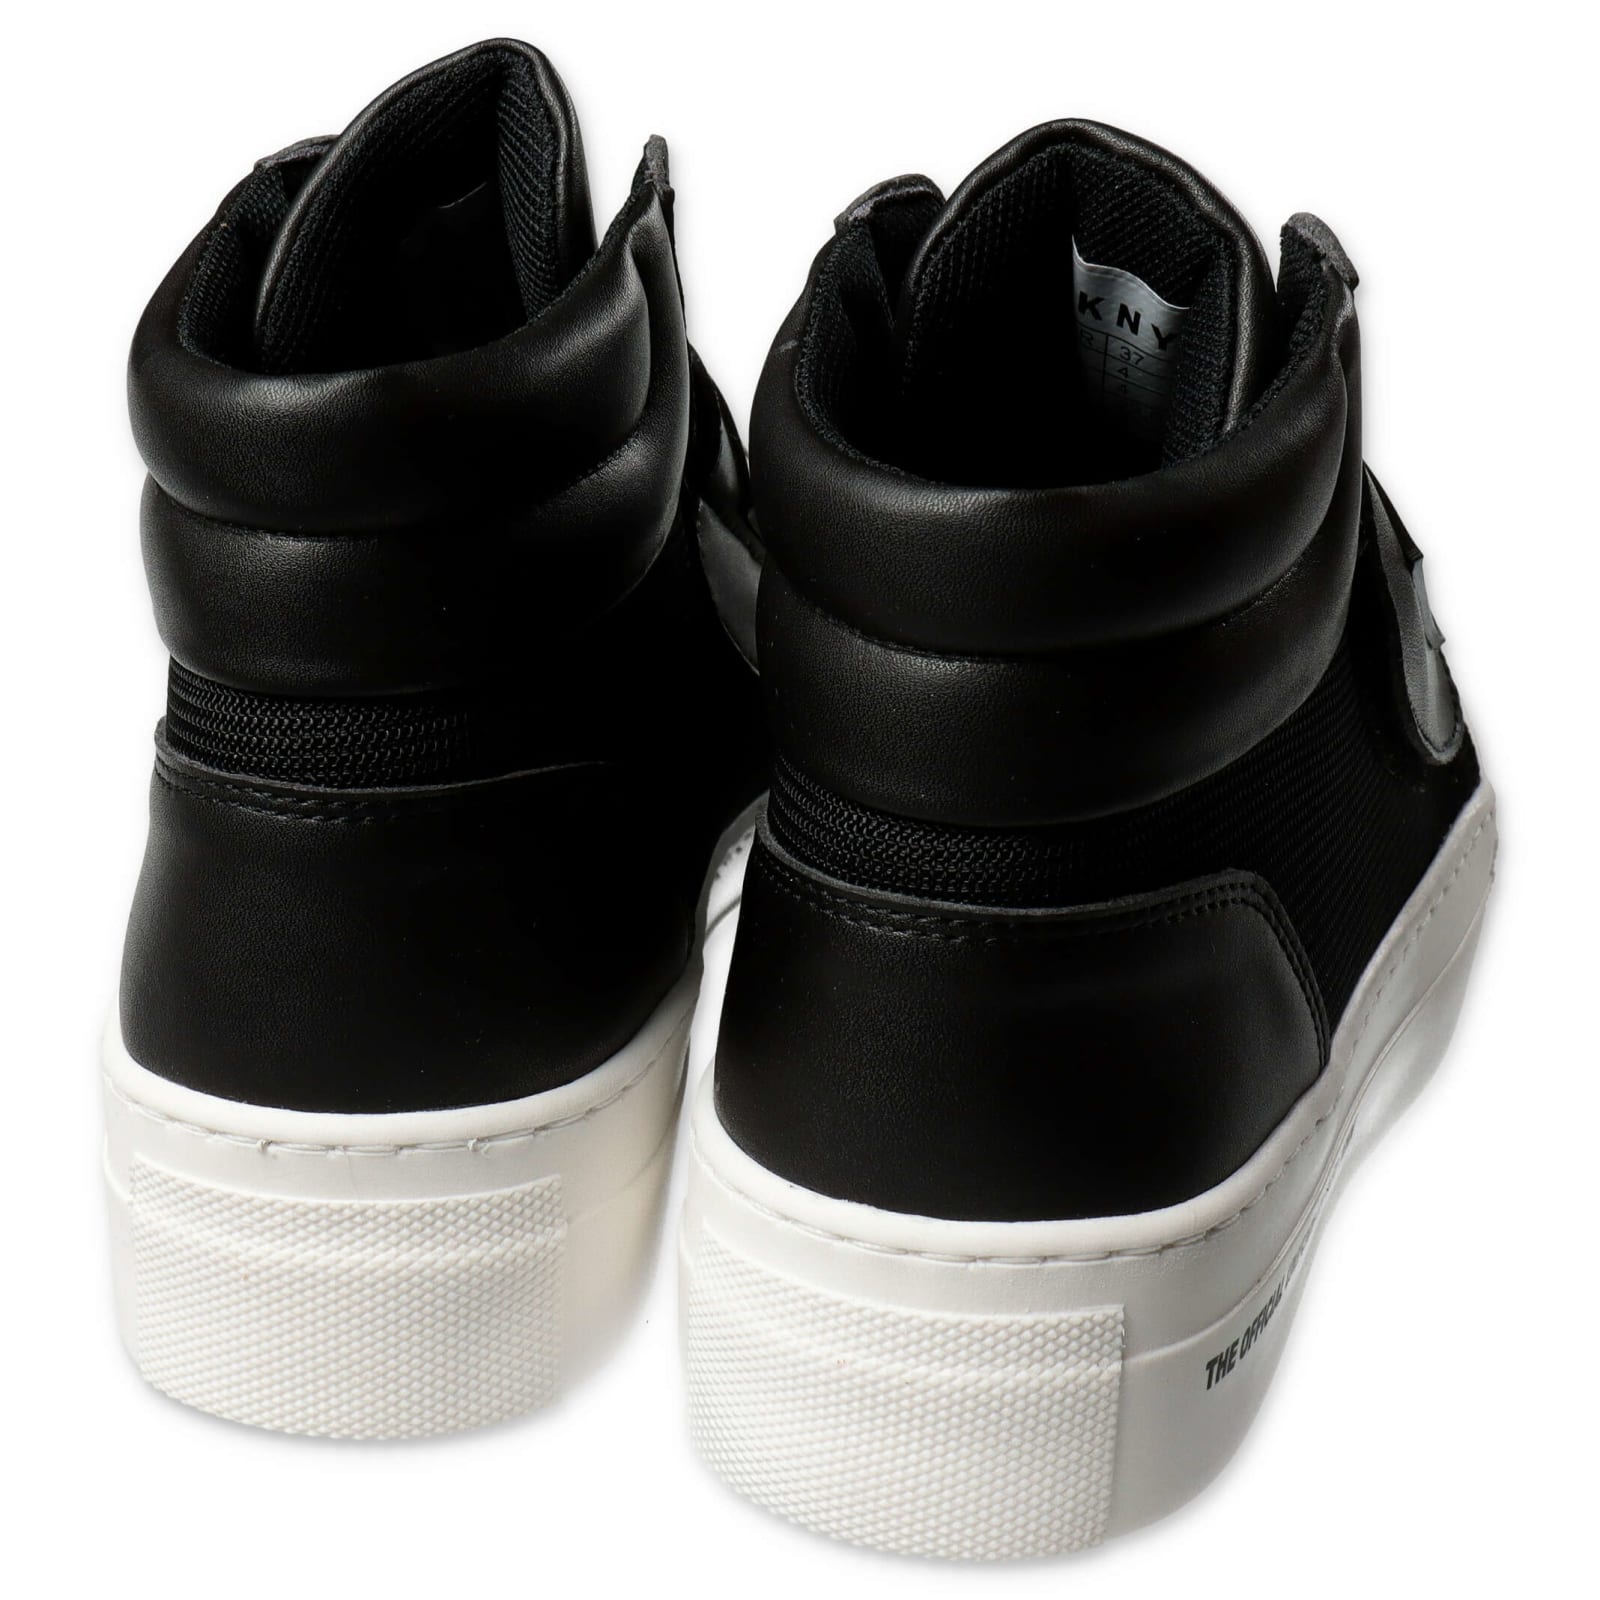 dkny shoes black